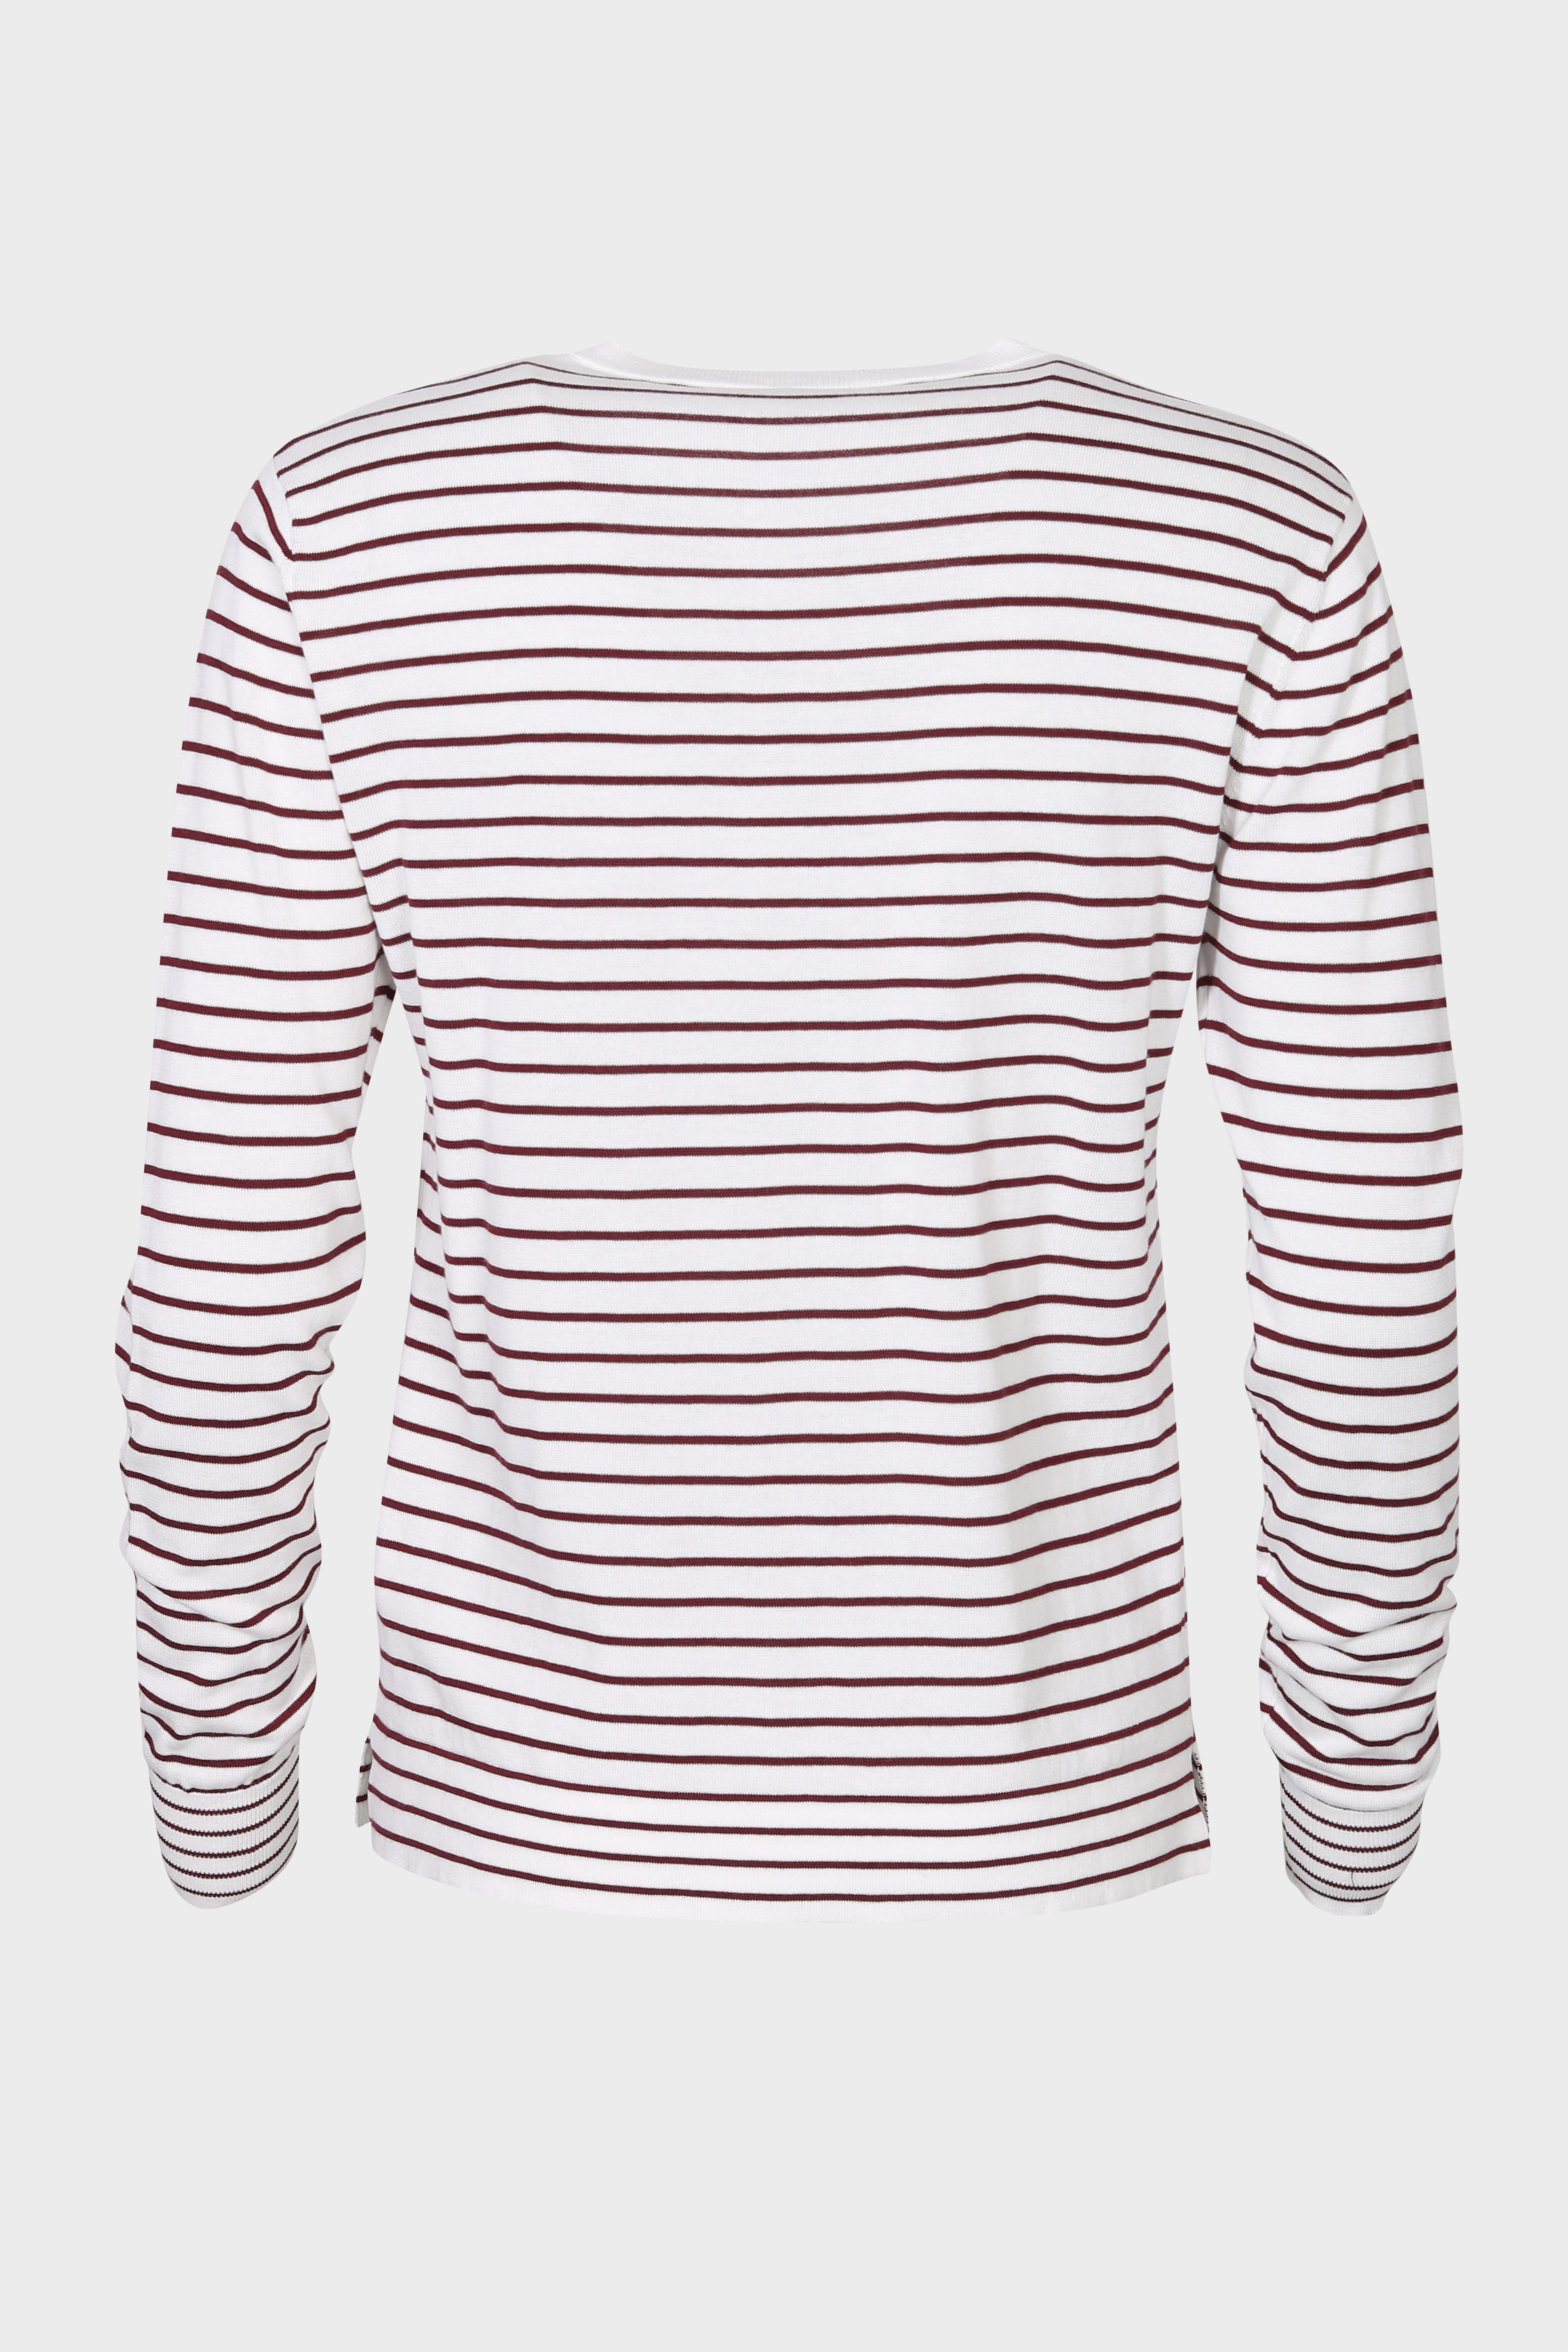 ASPESI Striped Cotton Sweater White/Bordeaux IT40 / DE34